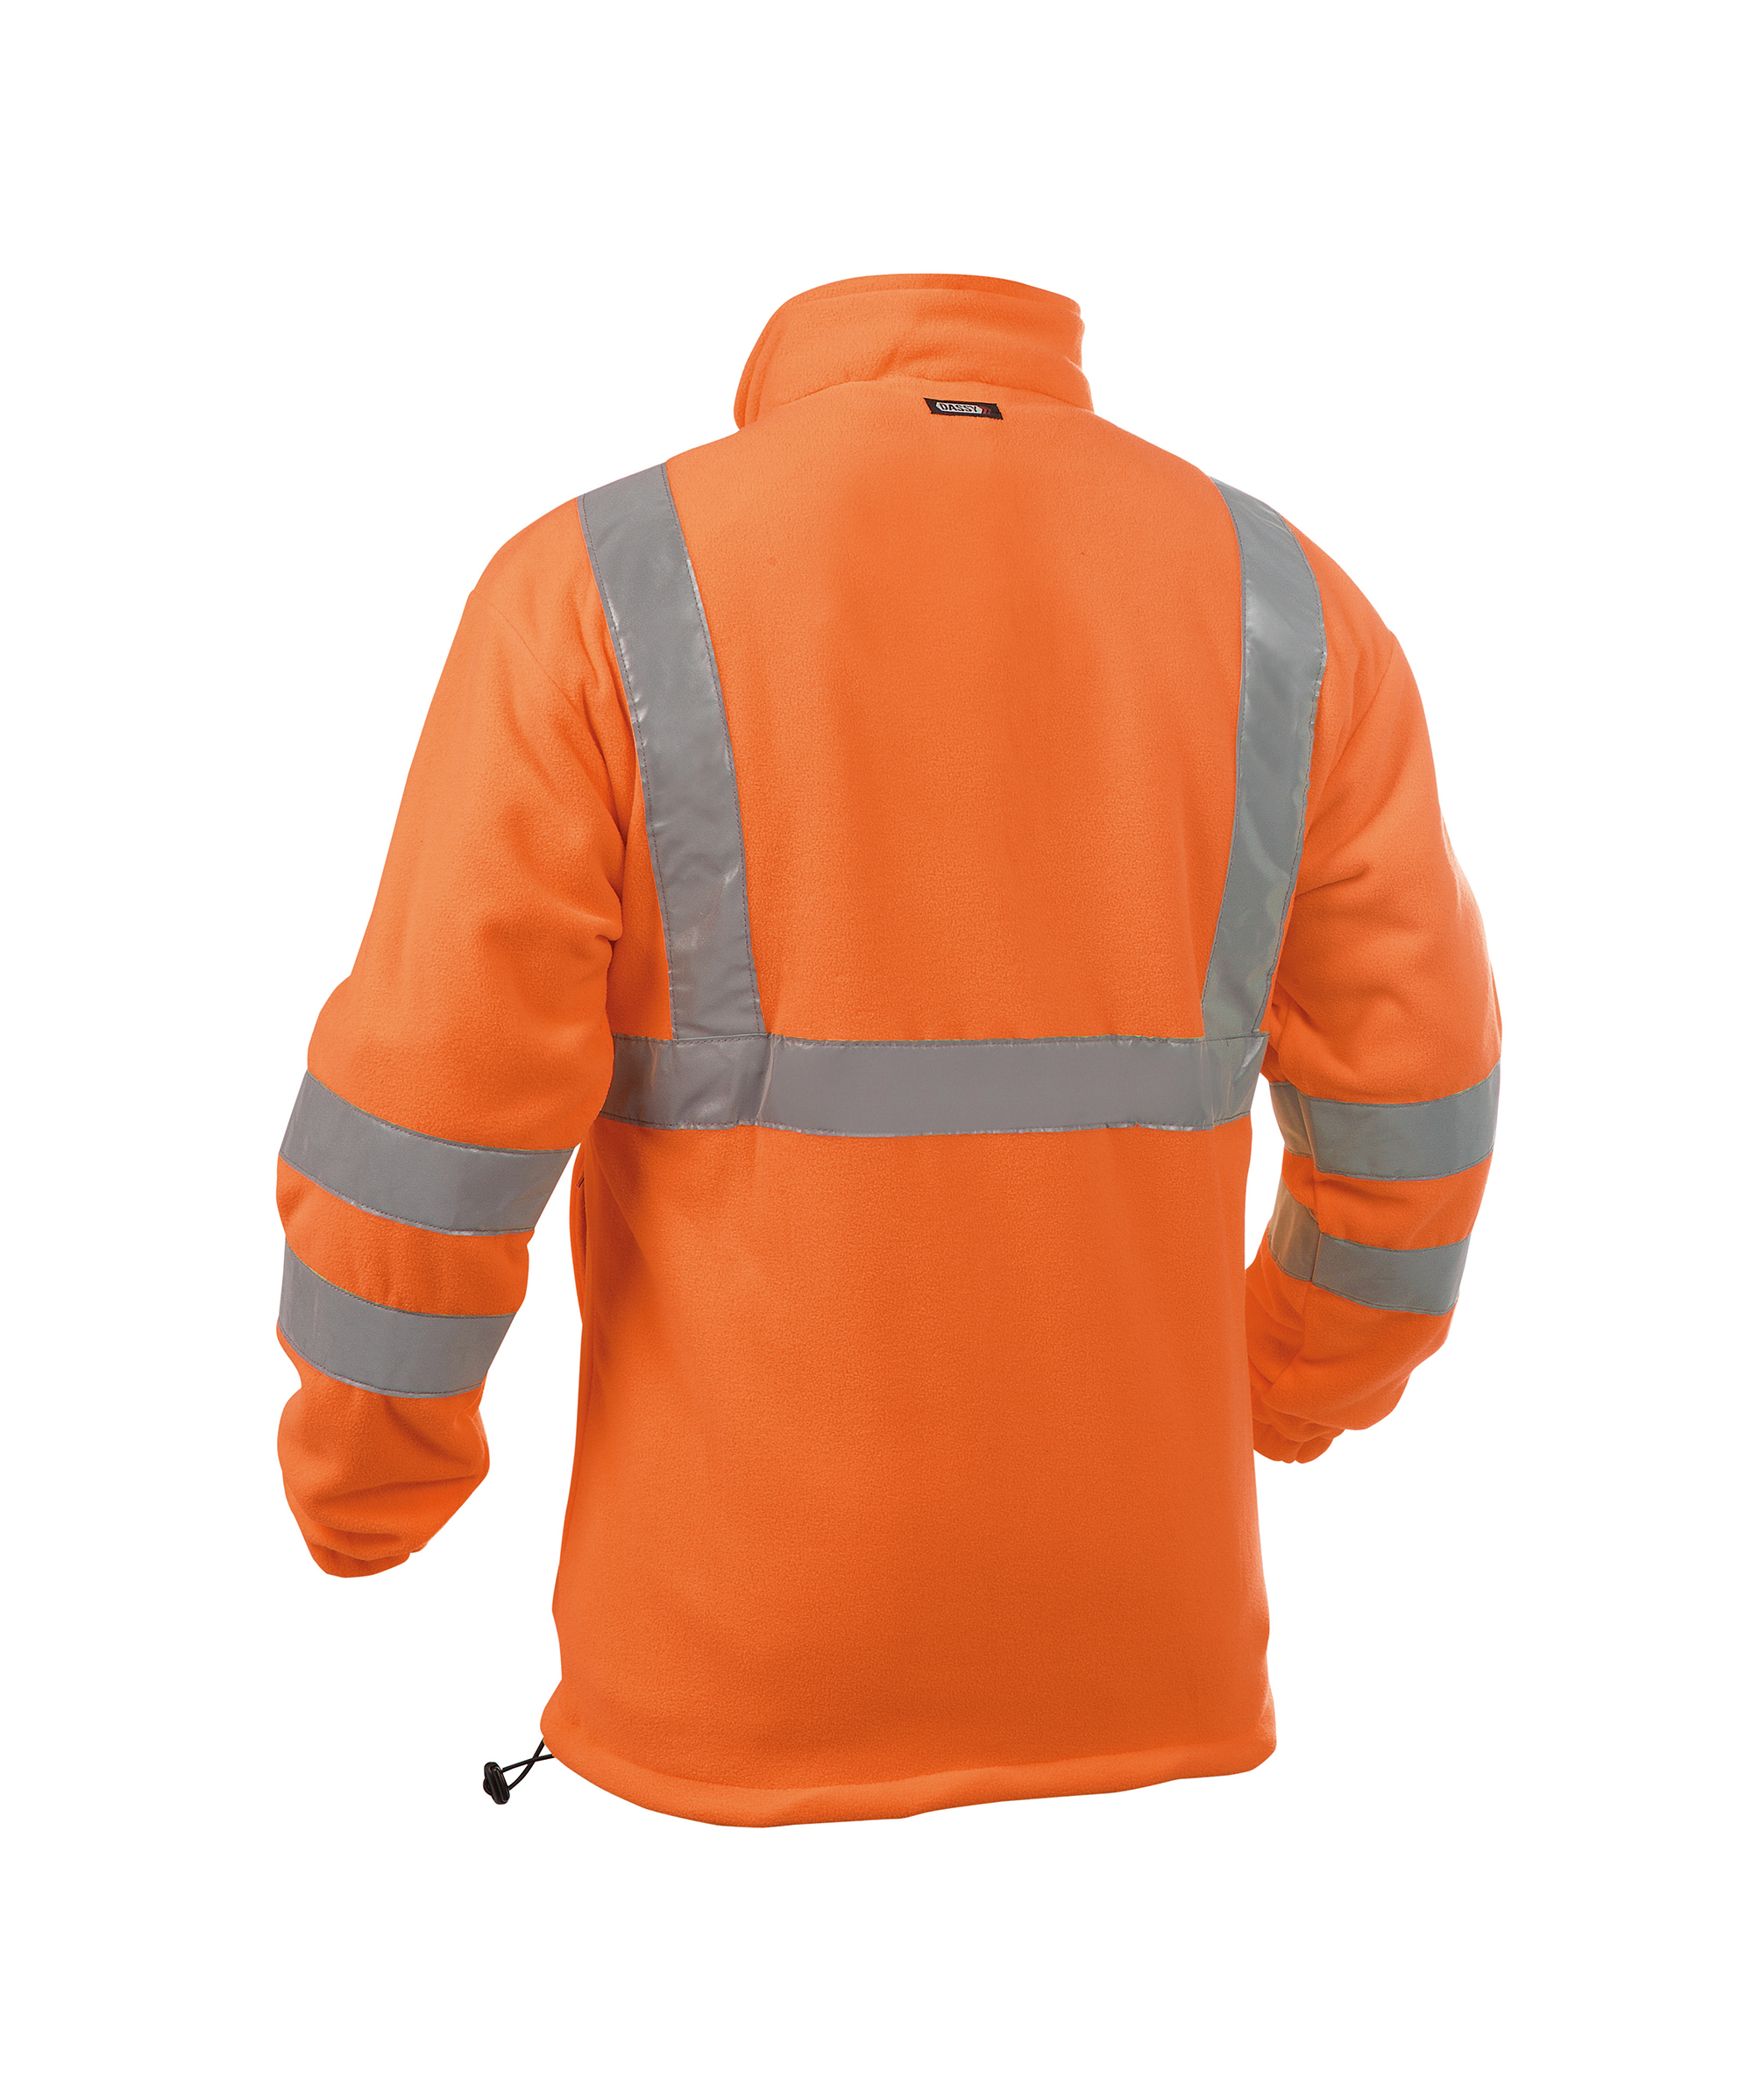 kaluga_high-visibility-fleece-jacket_fluo-orange_back.jpg